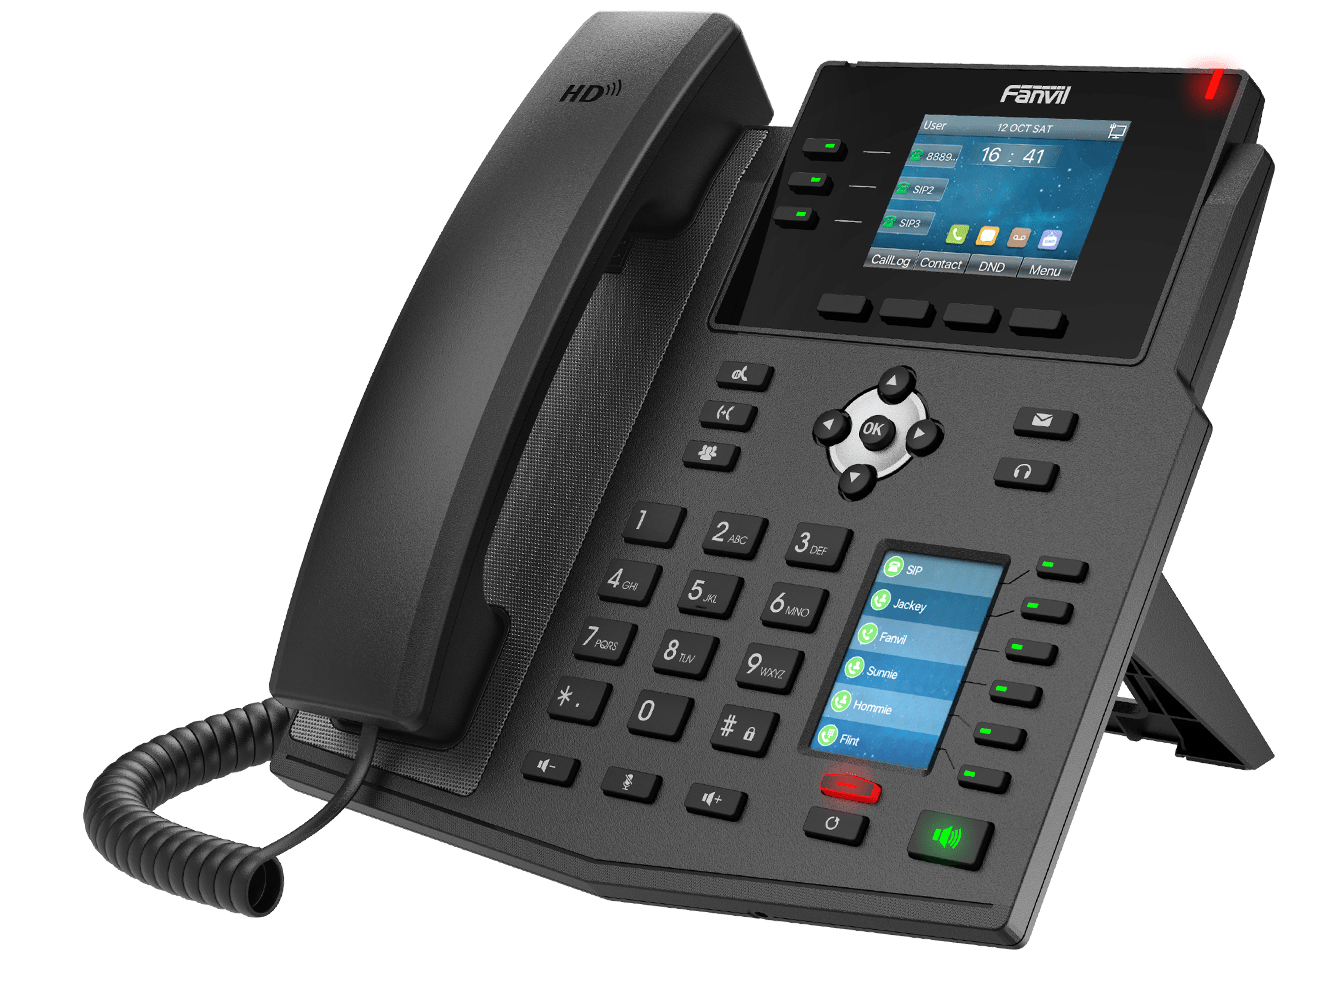 Fanvil X4U Enterprise IP Phone right